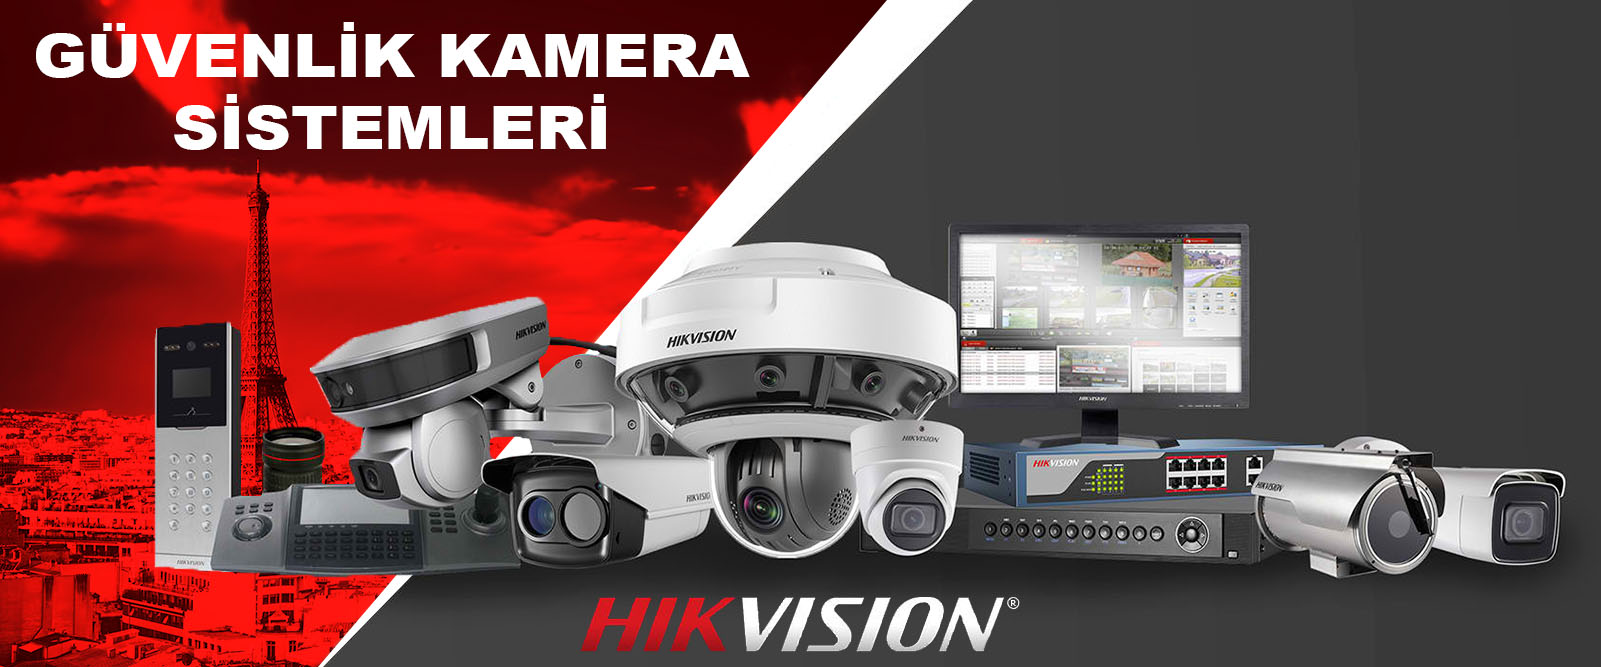 hikvision güvenlik kamera sistemleri